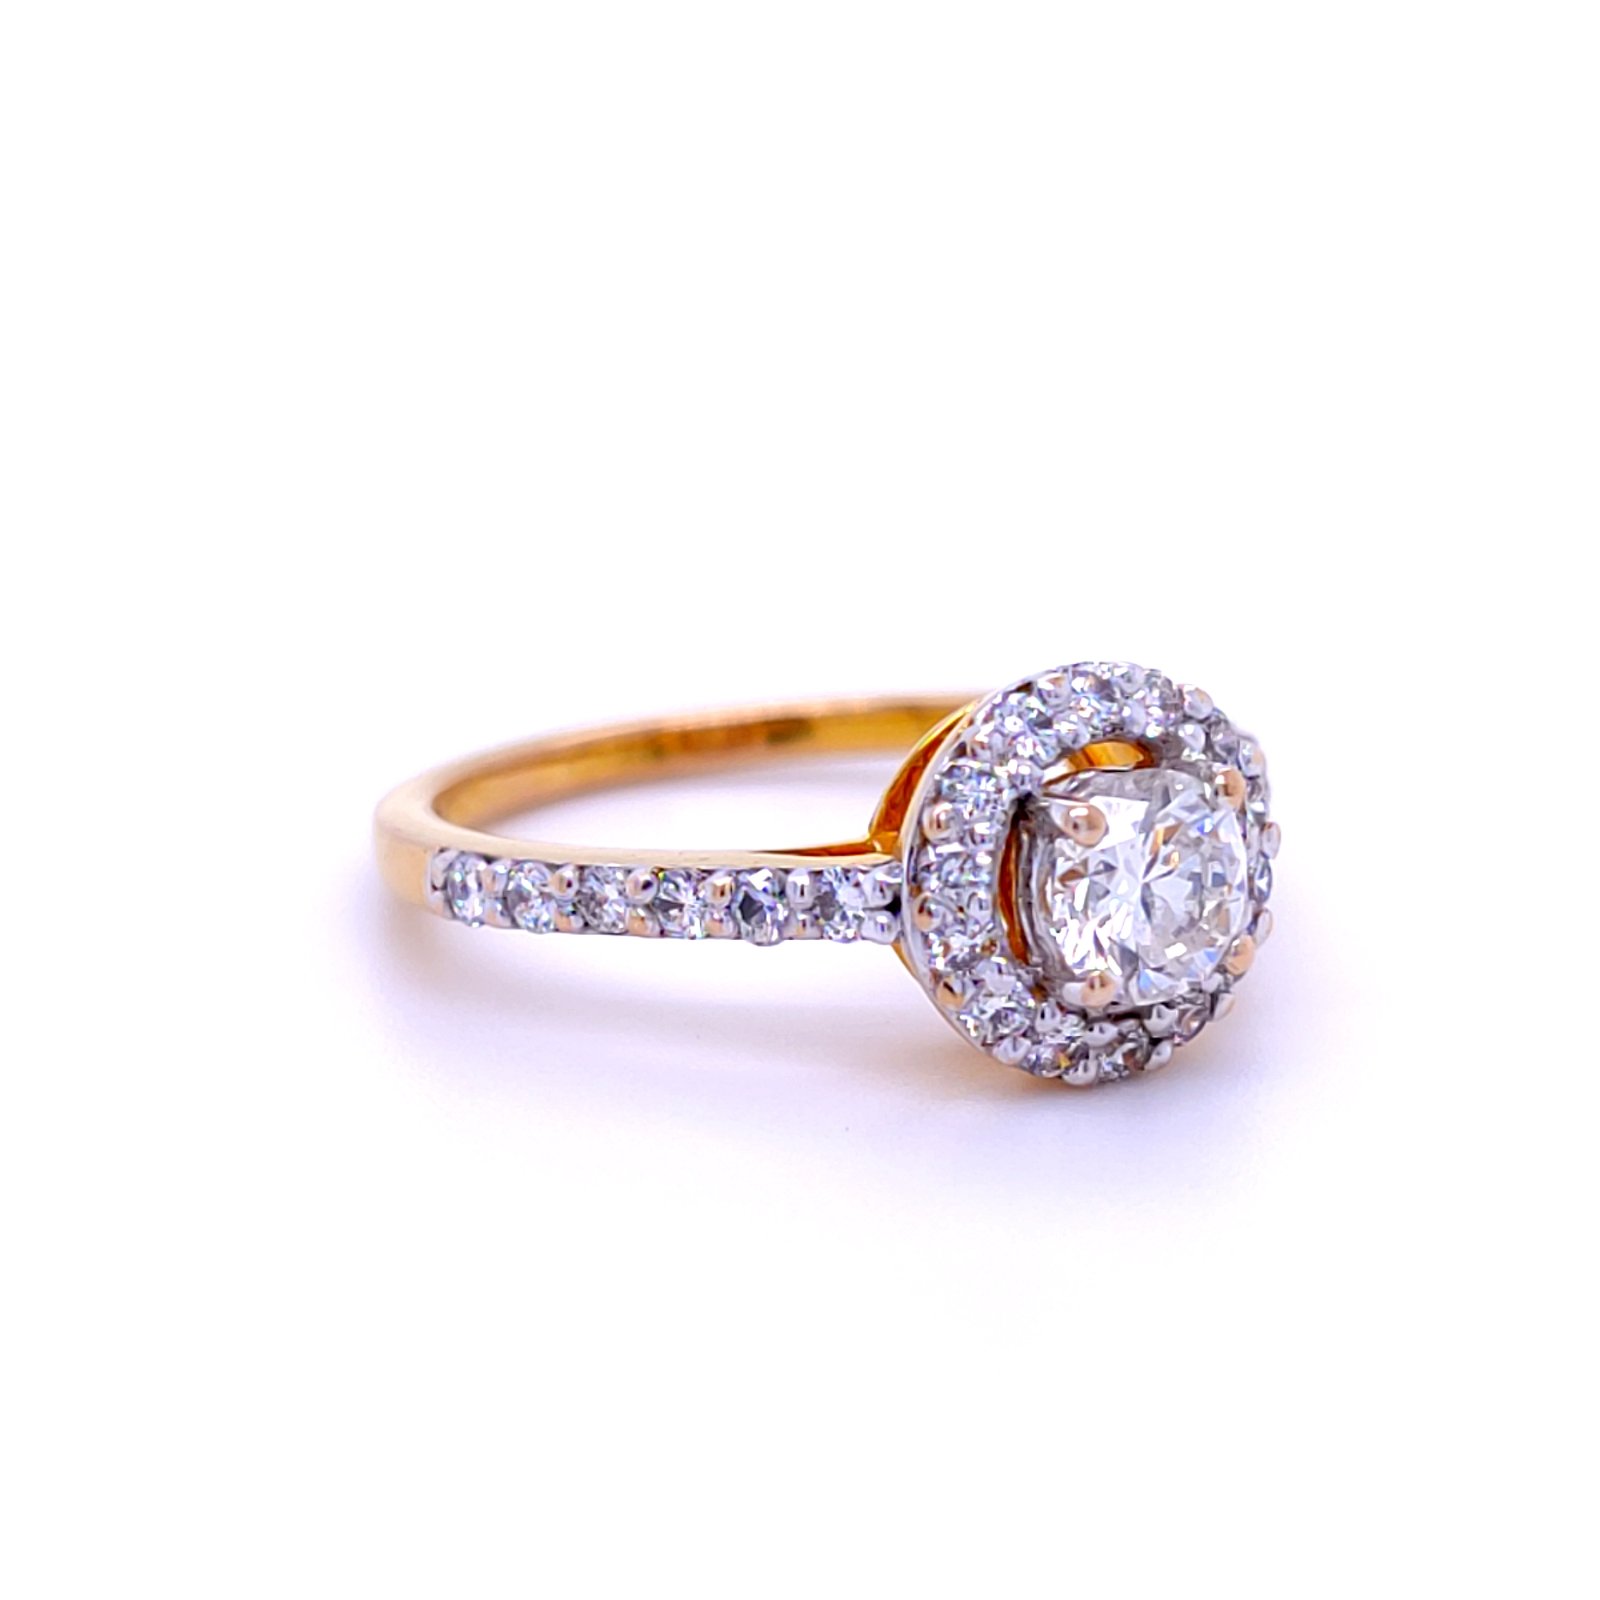 Trilogy Engagement Ring & Wedding Band | Trilogy engagement ring, Three diamond  engagement ring, Wedding ring bands